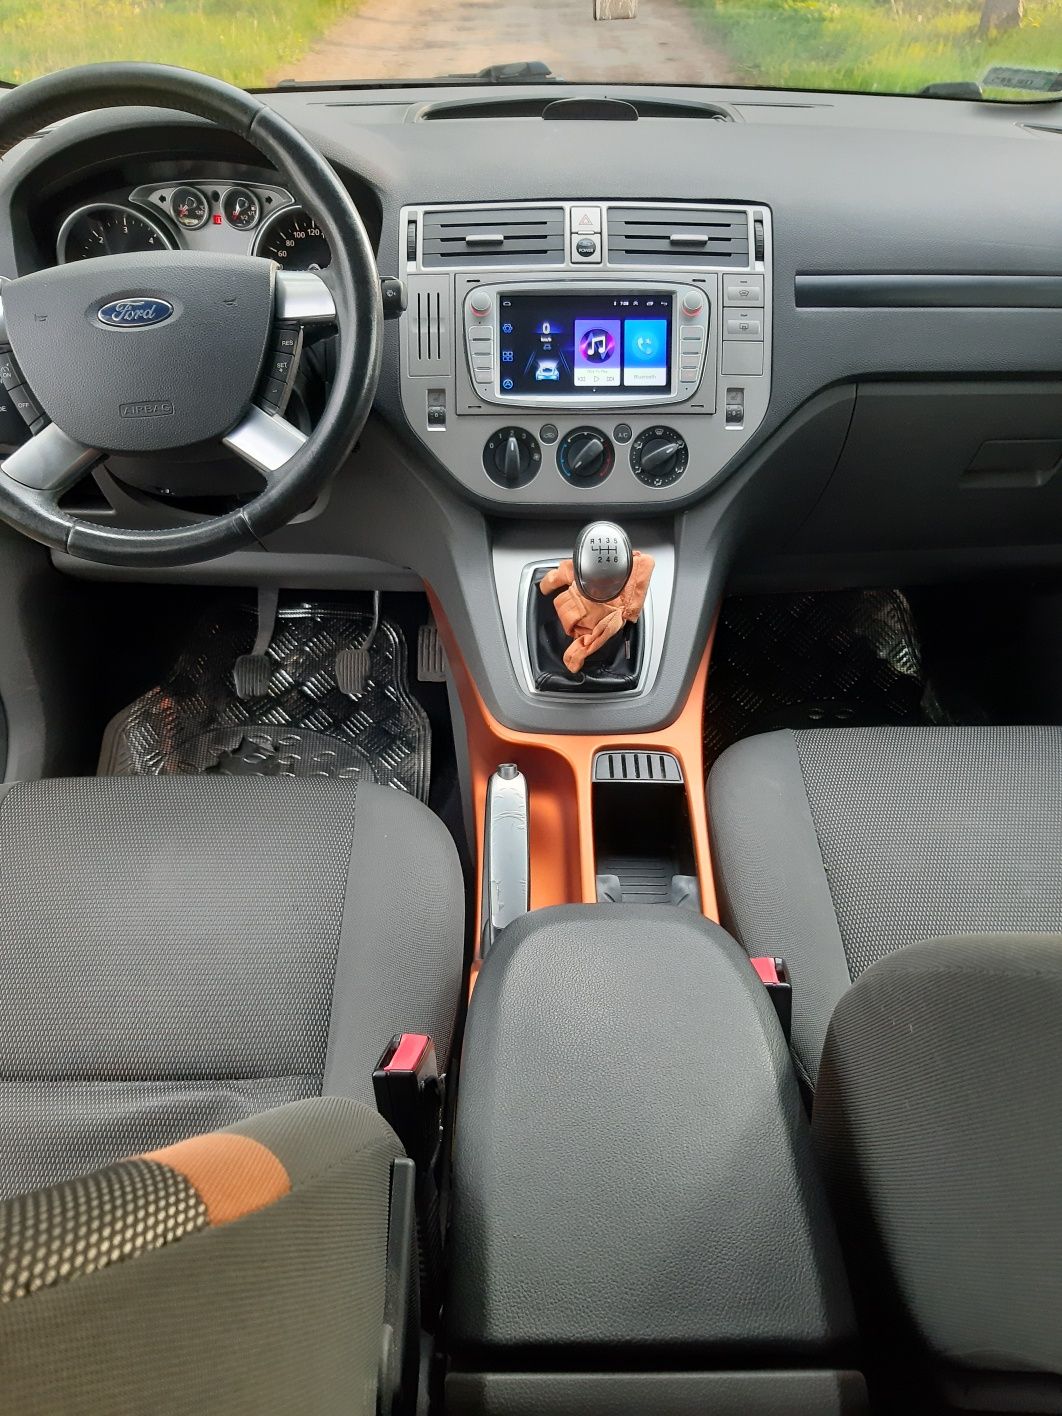 Ford Kuga bezwypadkowa nawigacja kamera cofania podgrzewane fotele